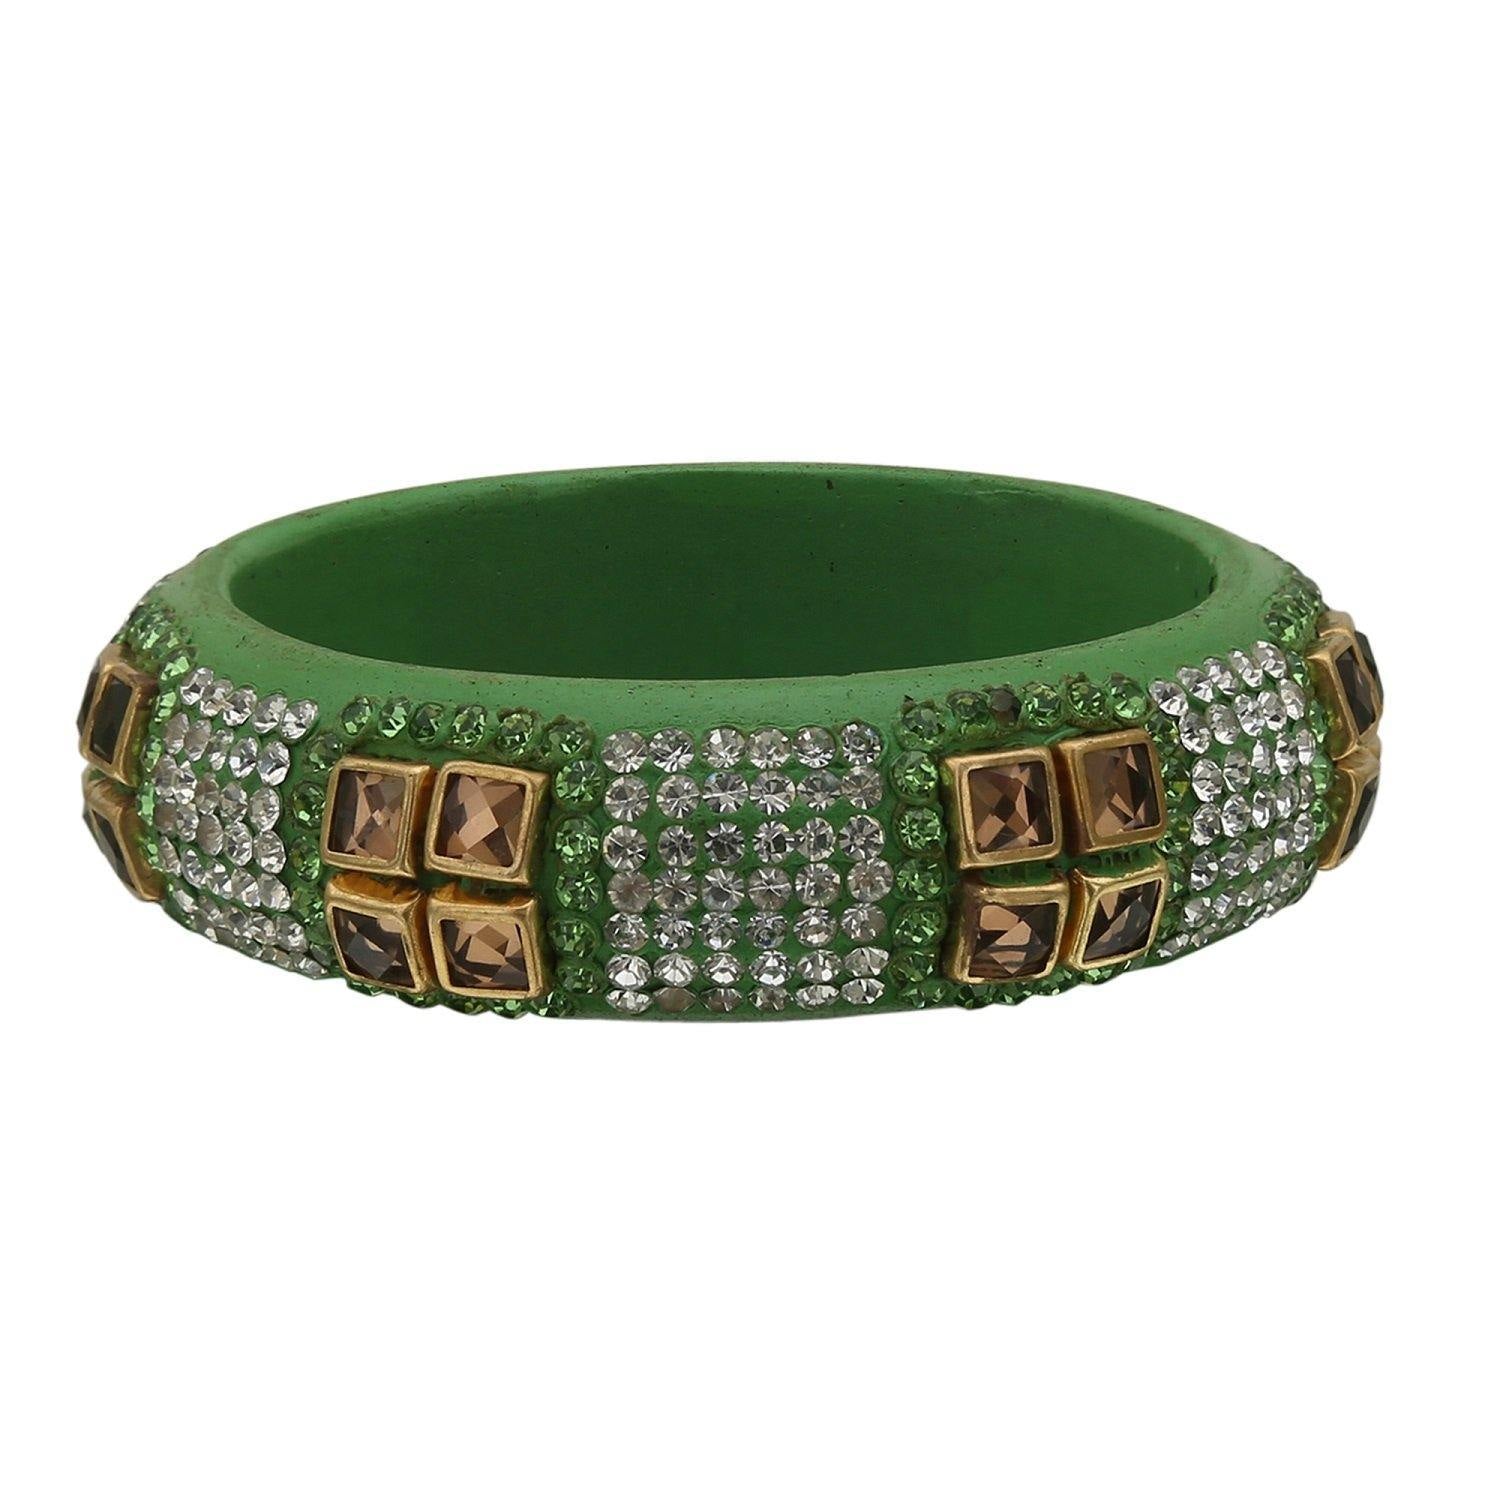 sukriti party wear green lac bangles - set of 2